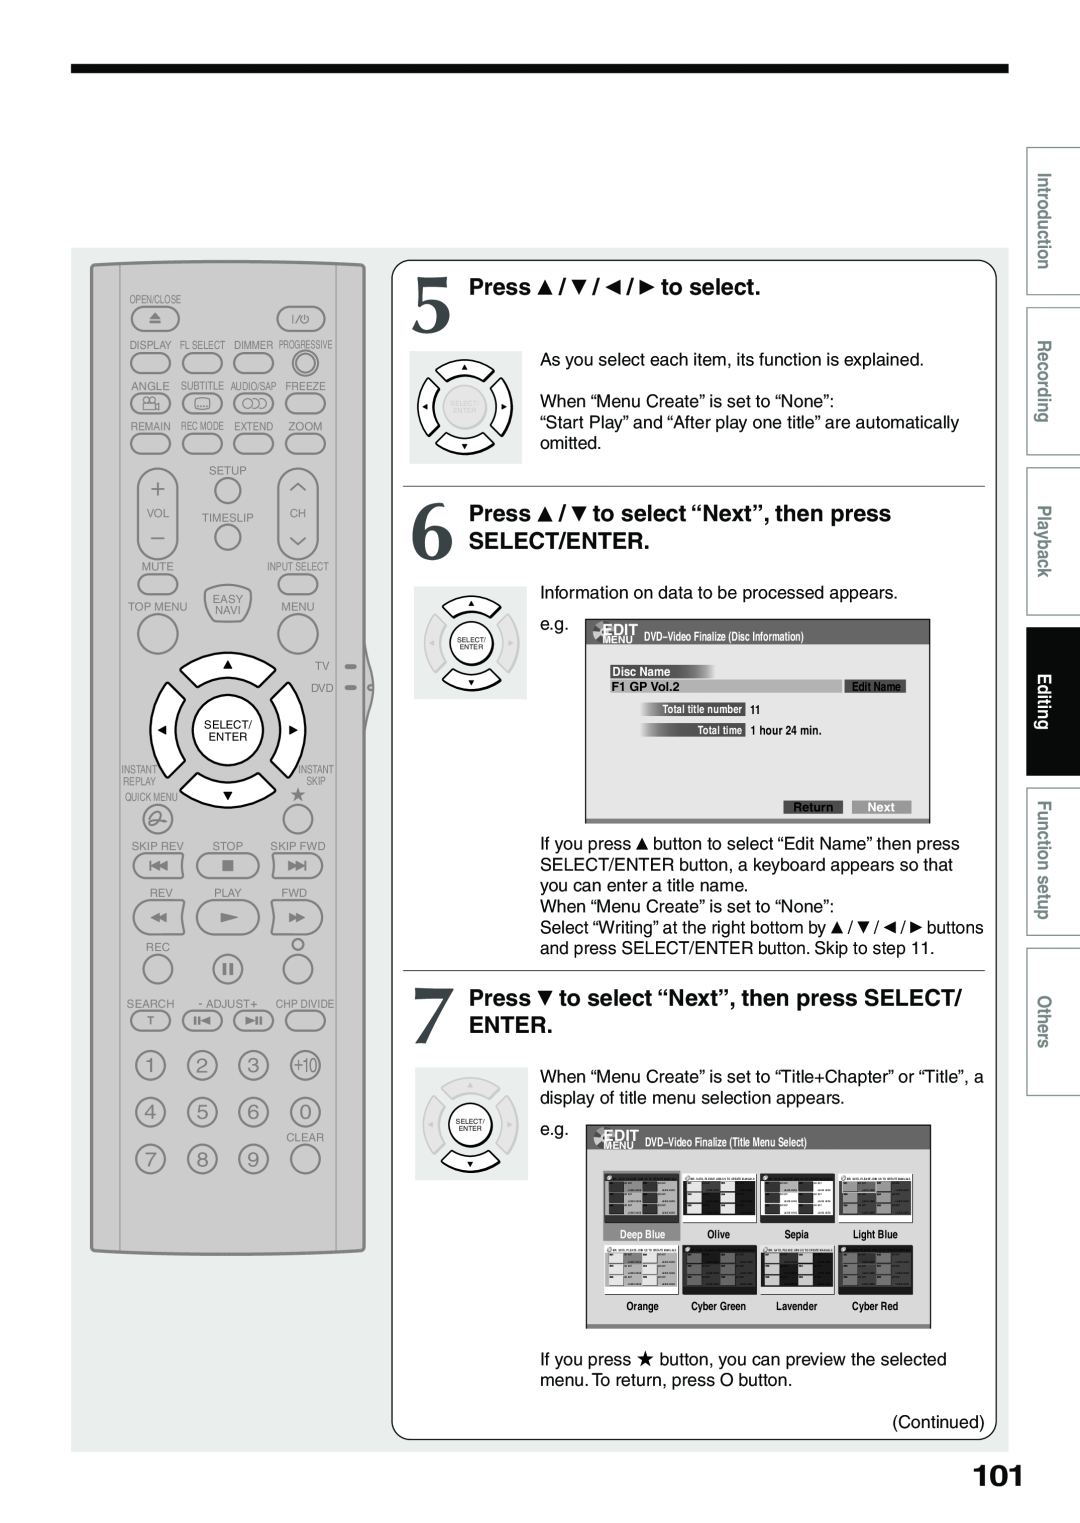 Toshiba D-R4SC Press / / / to select, Press / to select “Next”, then press, Select/Enter, Introduction RecordingPlayback 